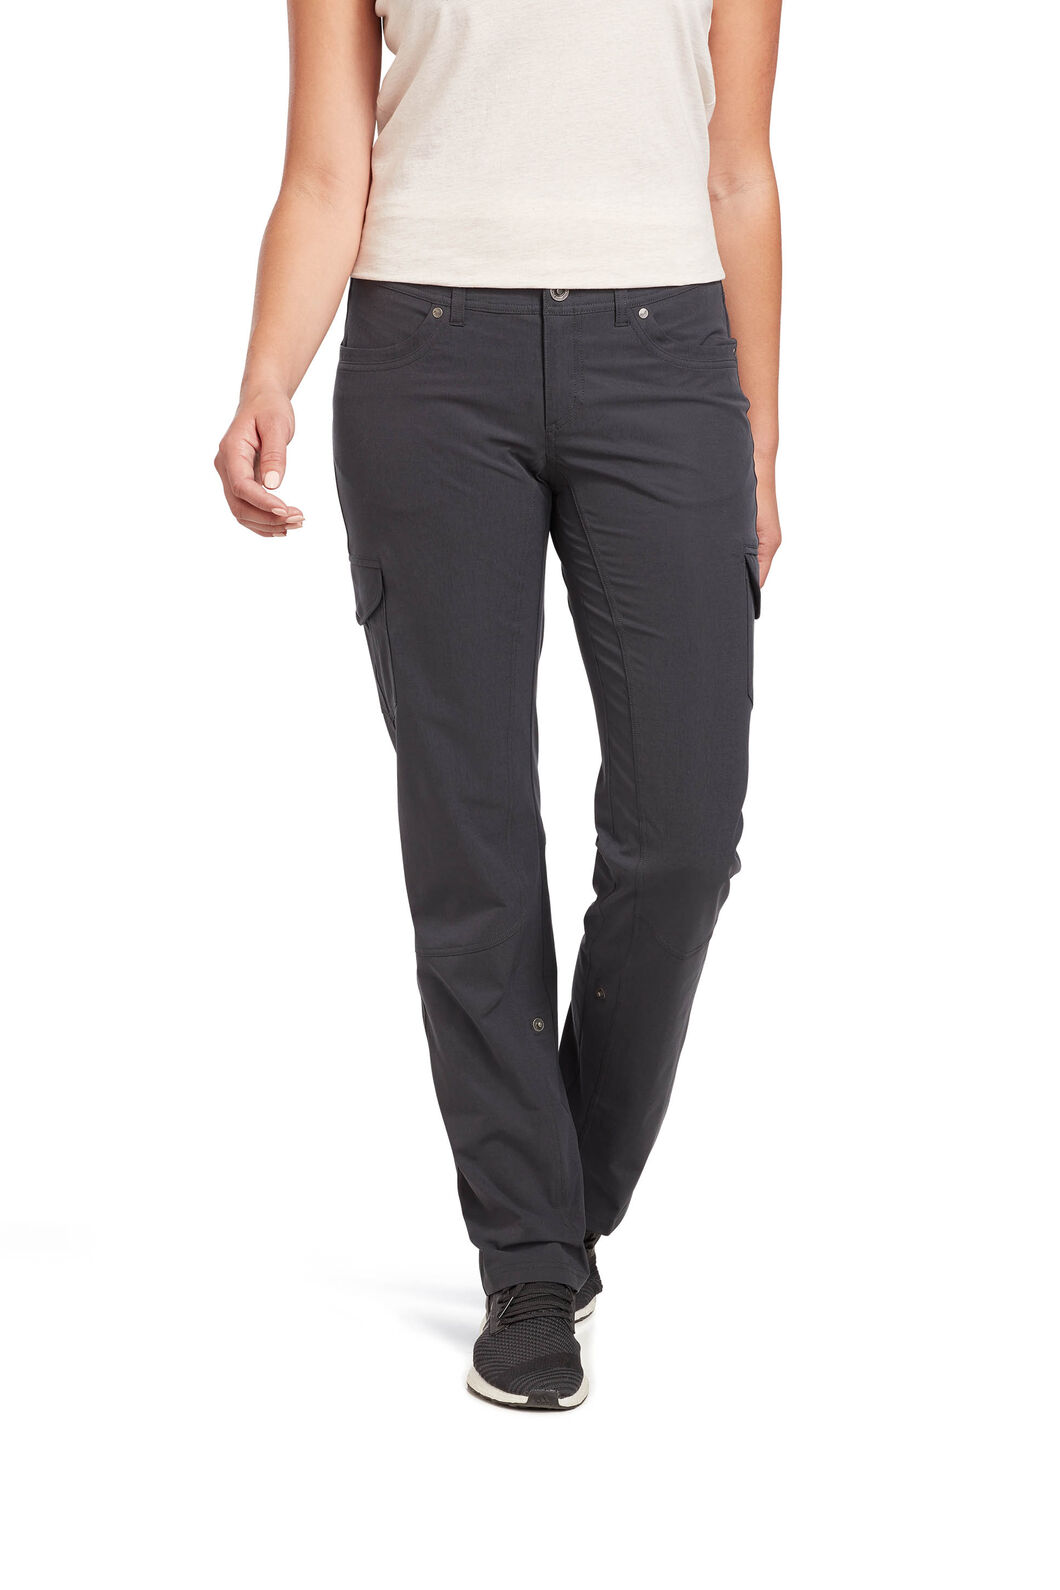 Kuhl Freeflex™ Roll-Up Pants — Women's (32" Inseam) | Macpac